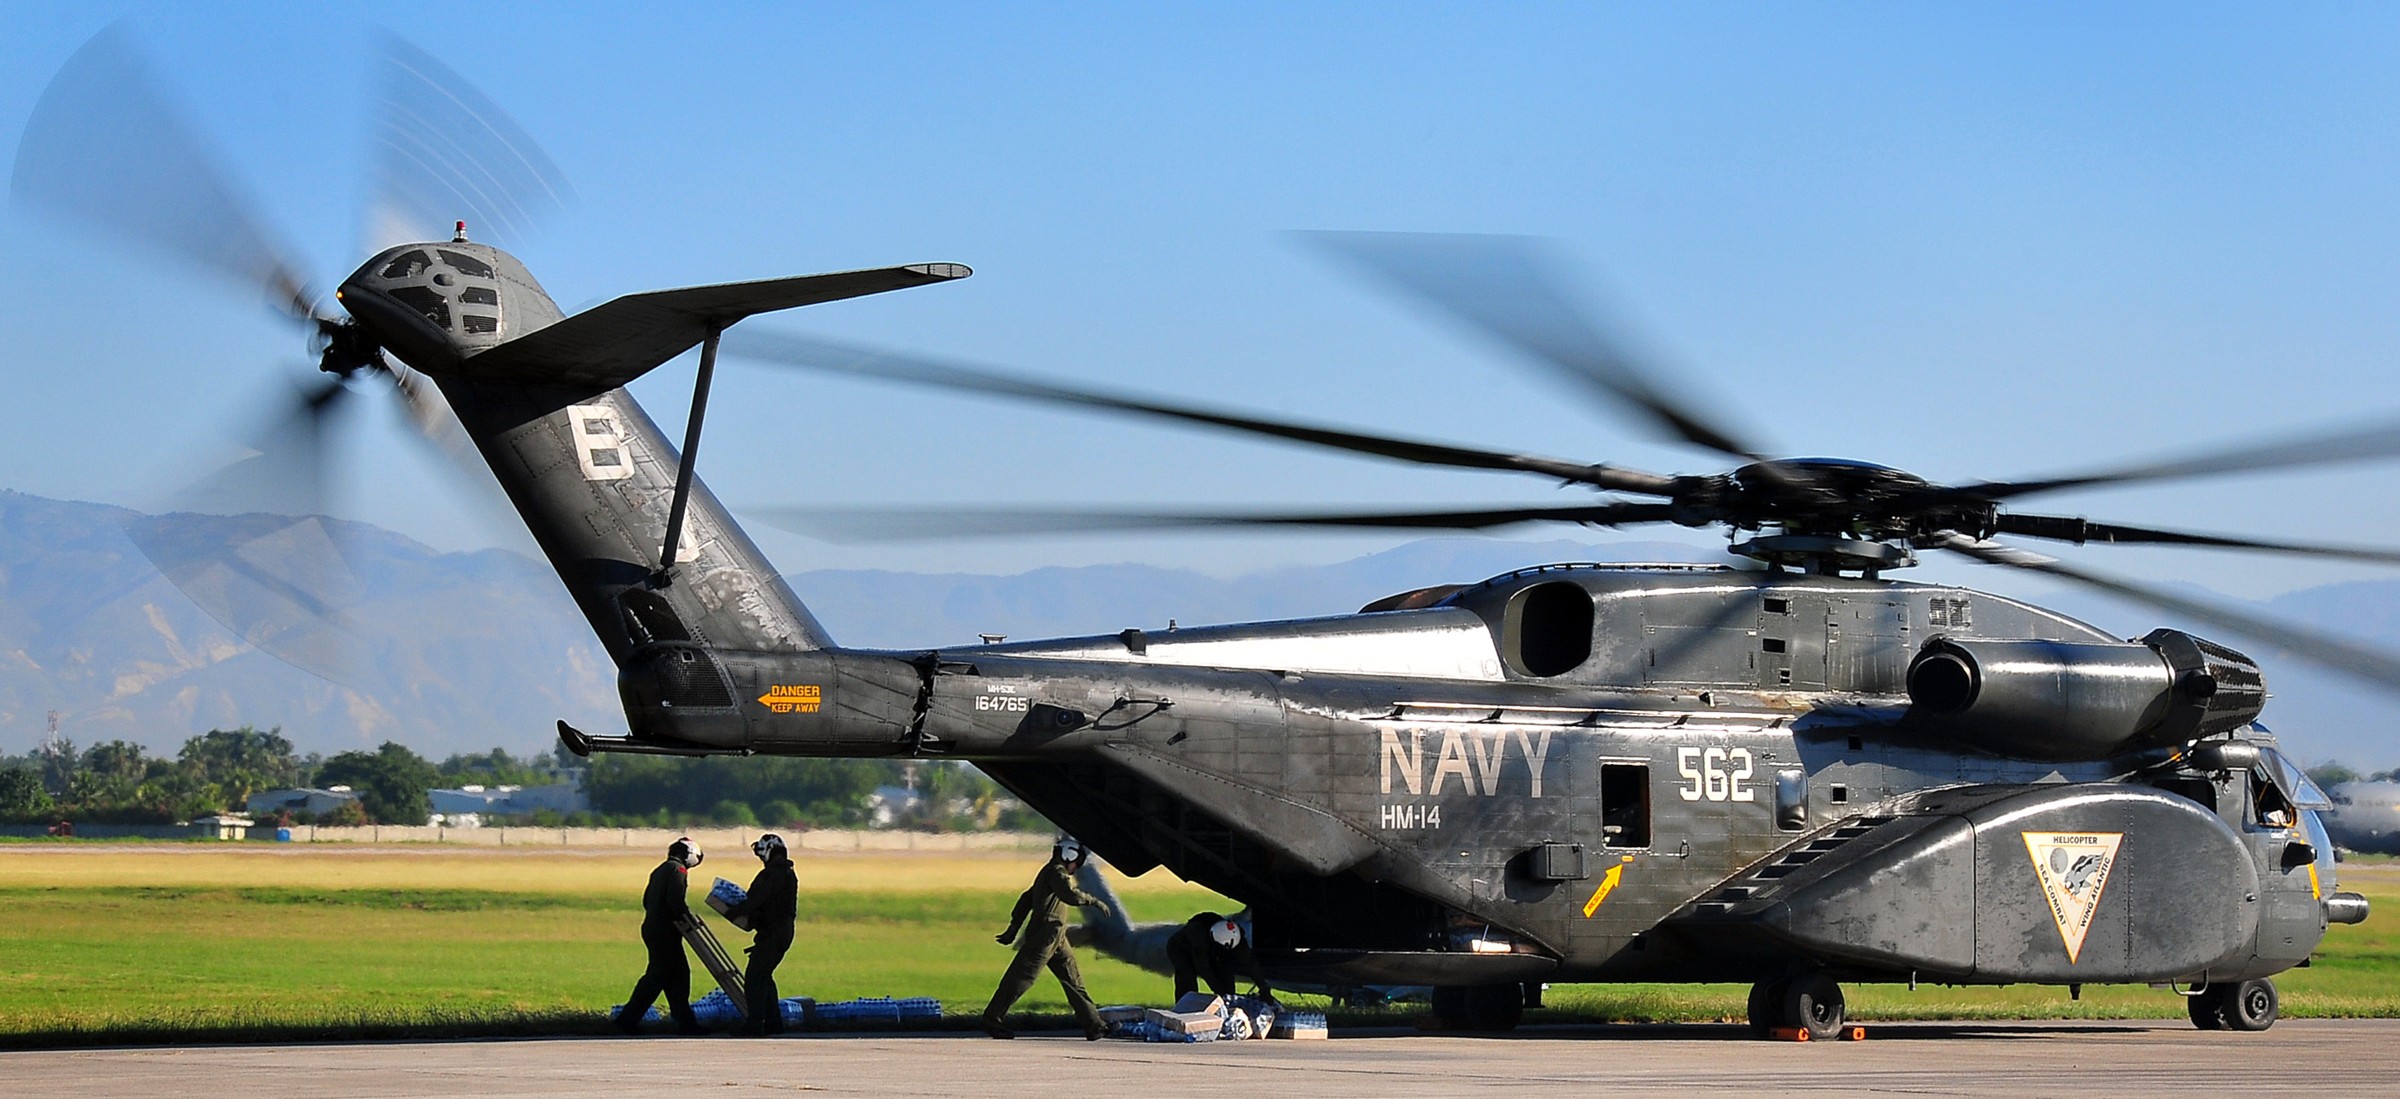 hm-14 vanguard helicopter mine countermeasures squadron navy mh-53e sea dragon 154